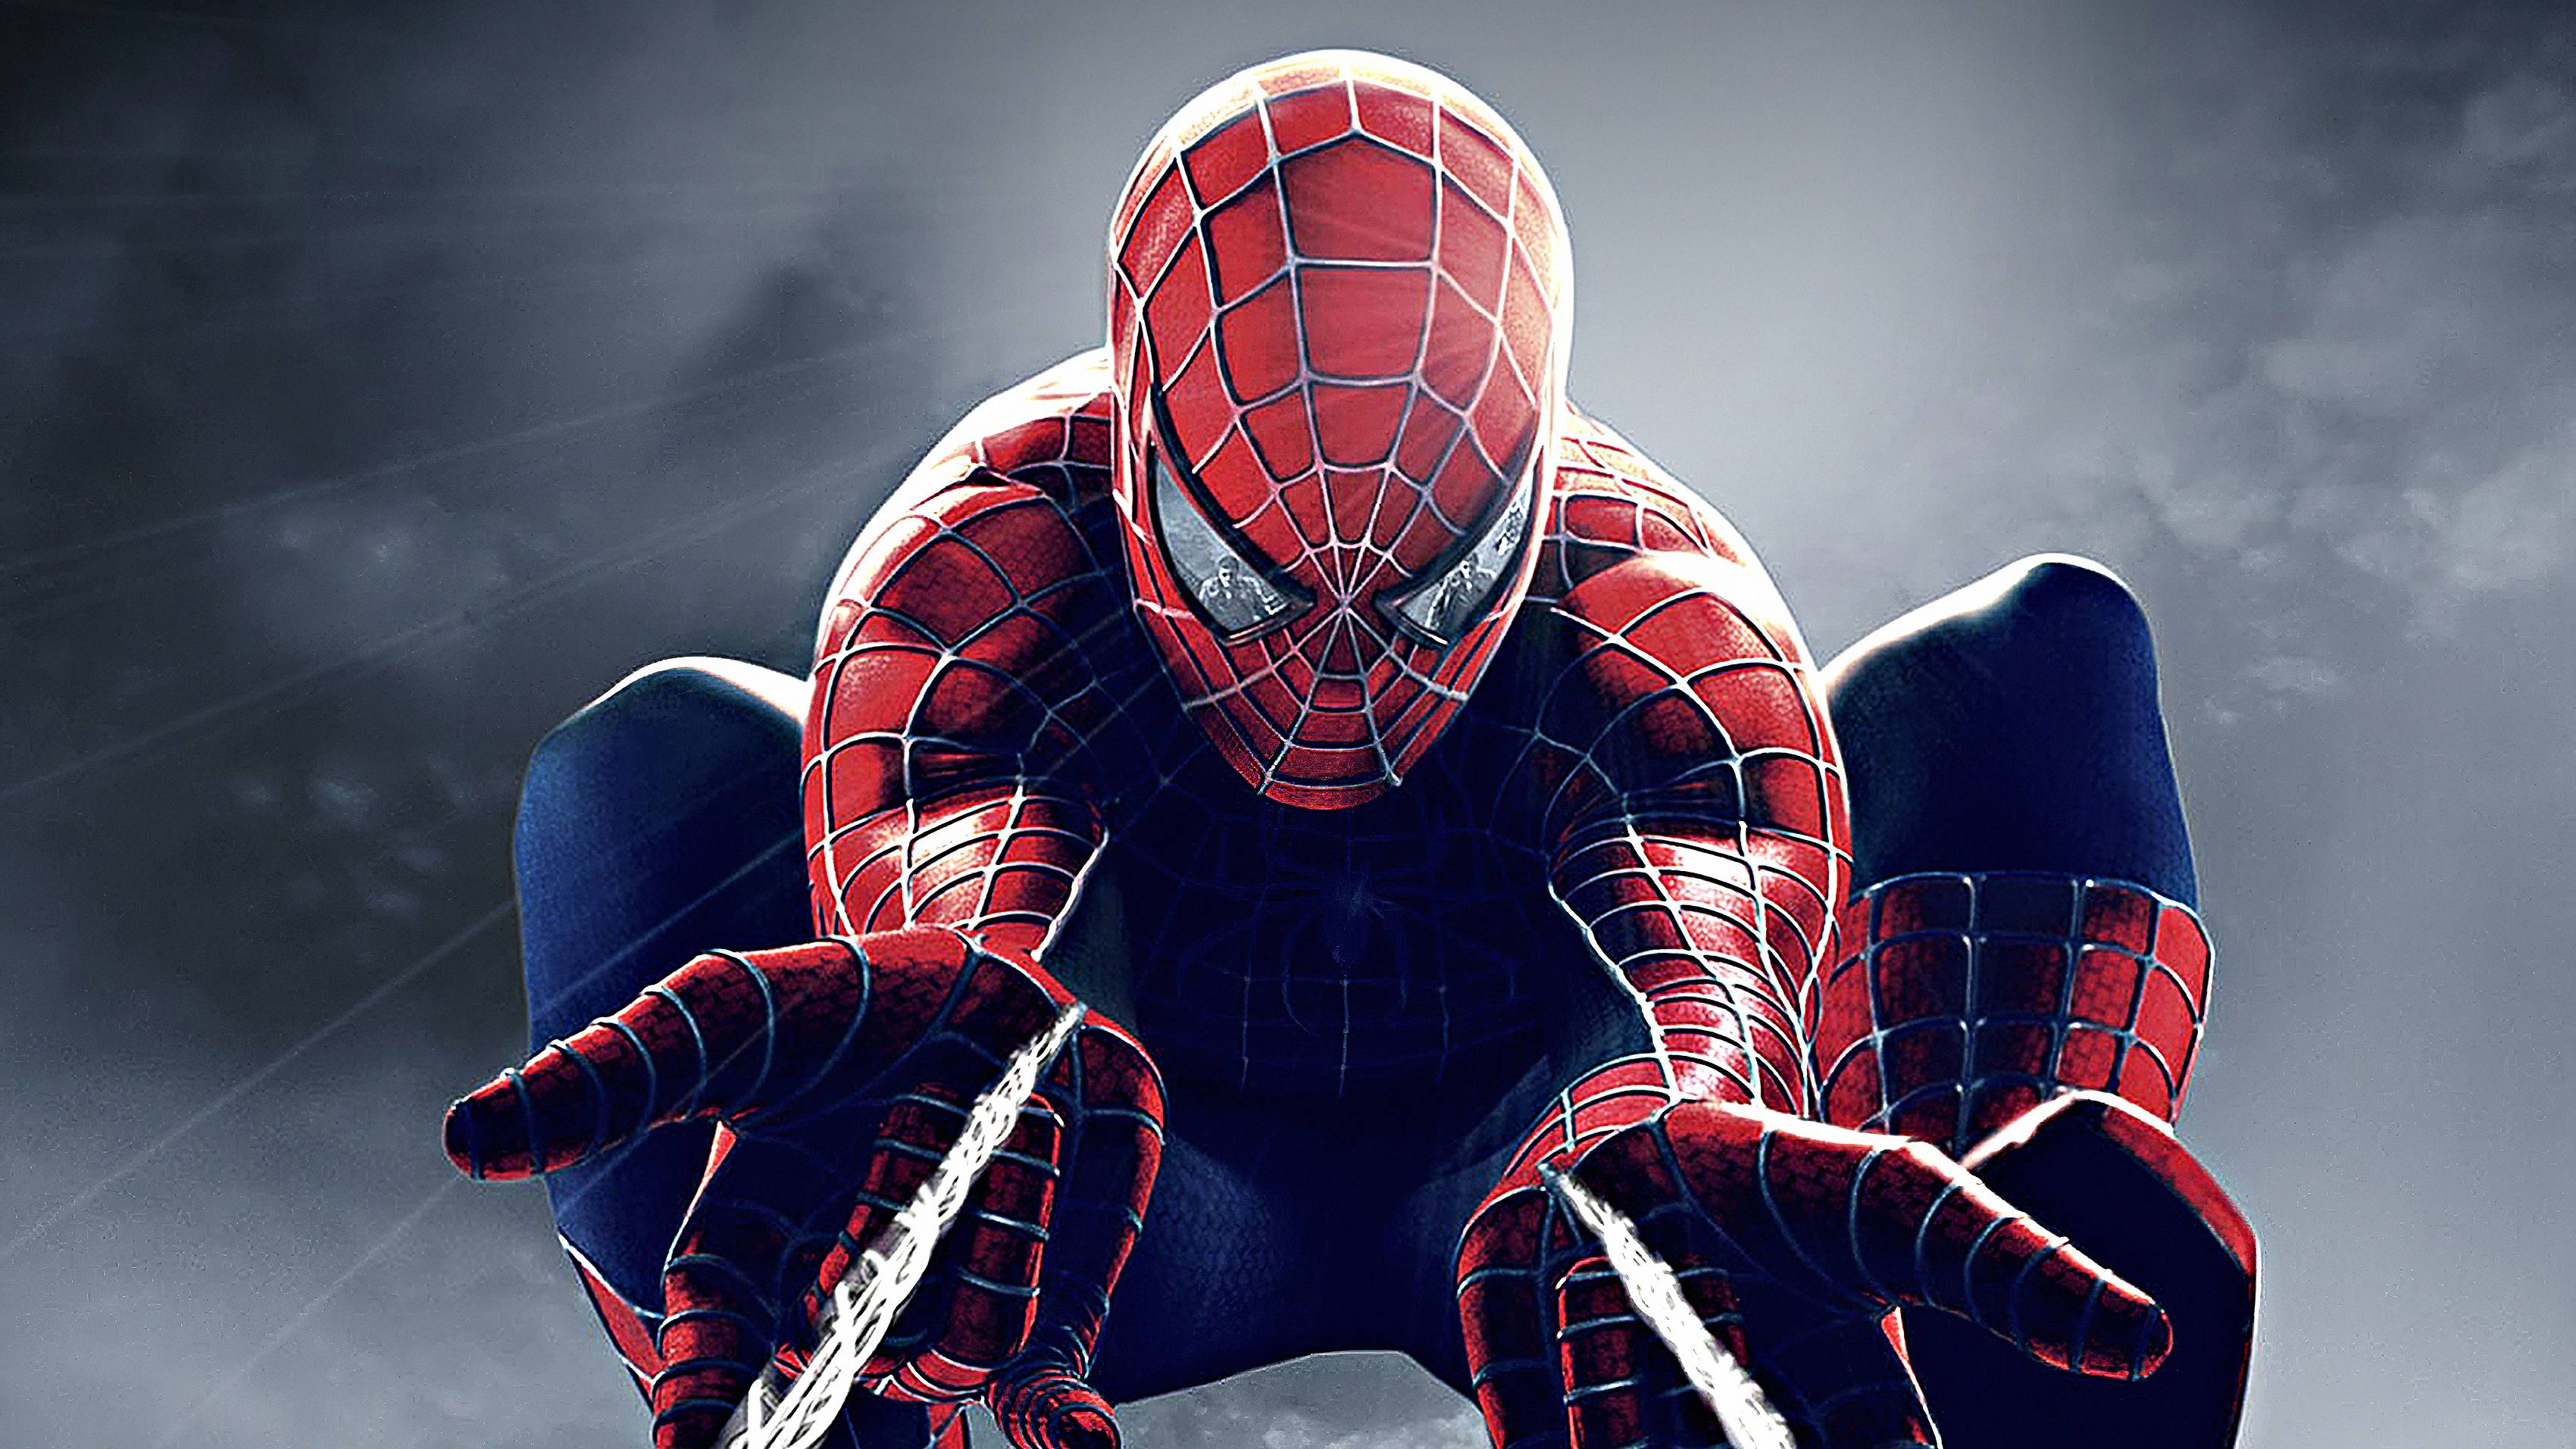 Spider Man Spiderweb Hd Superheroes 4k Wallpapers Images